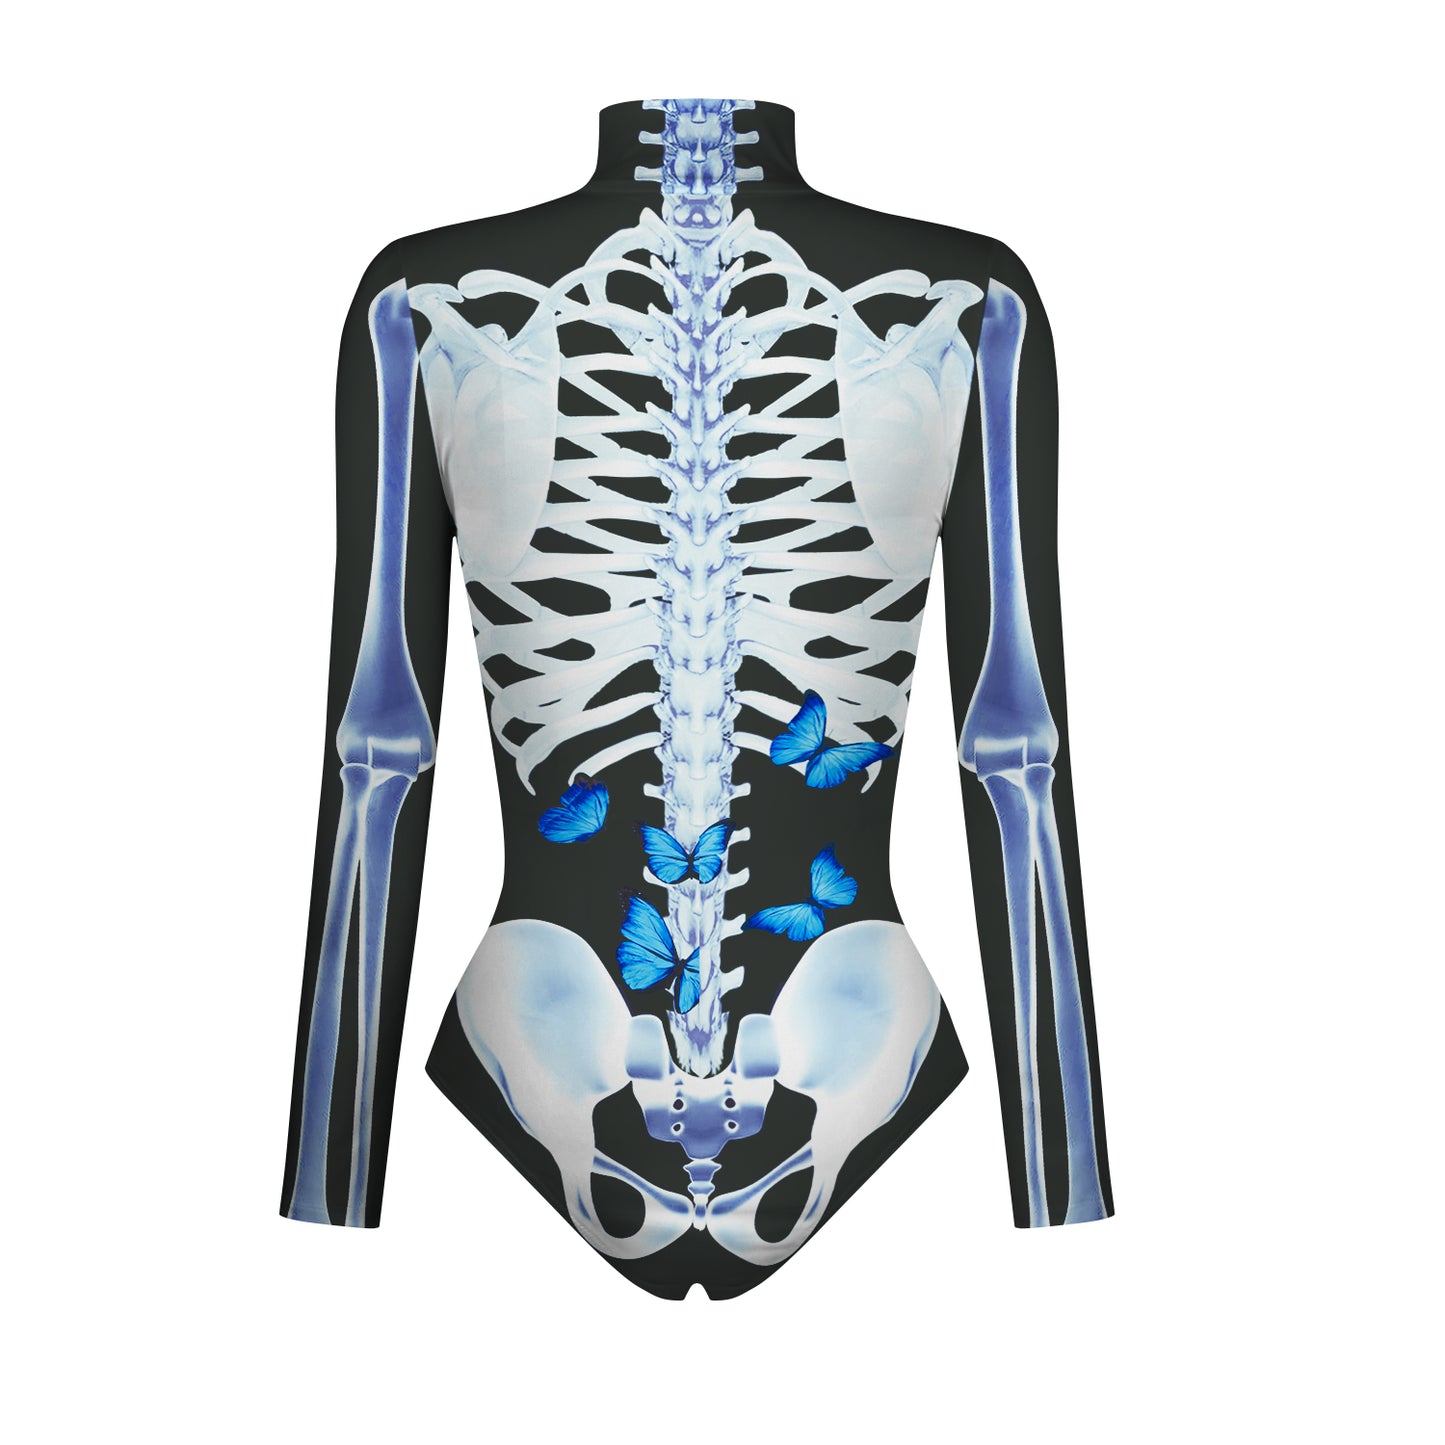 YESFASHION Halloween Skeleton Bodysuit Dress Up Zip Tops